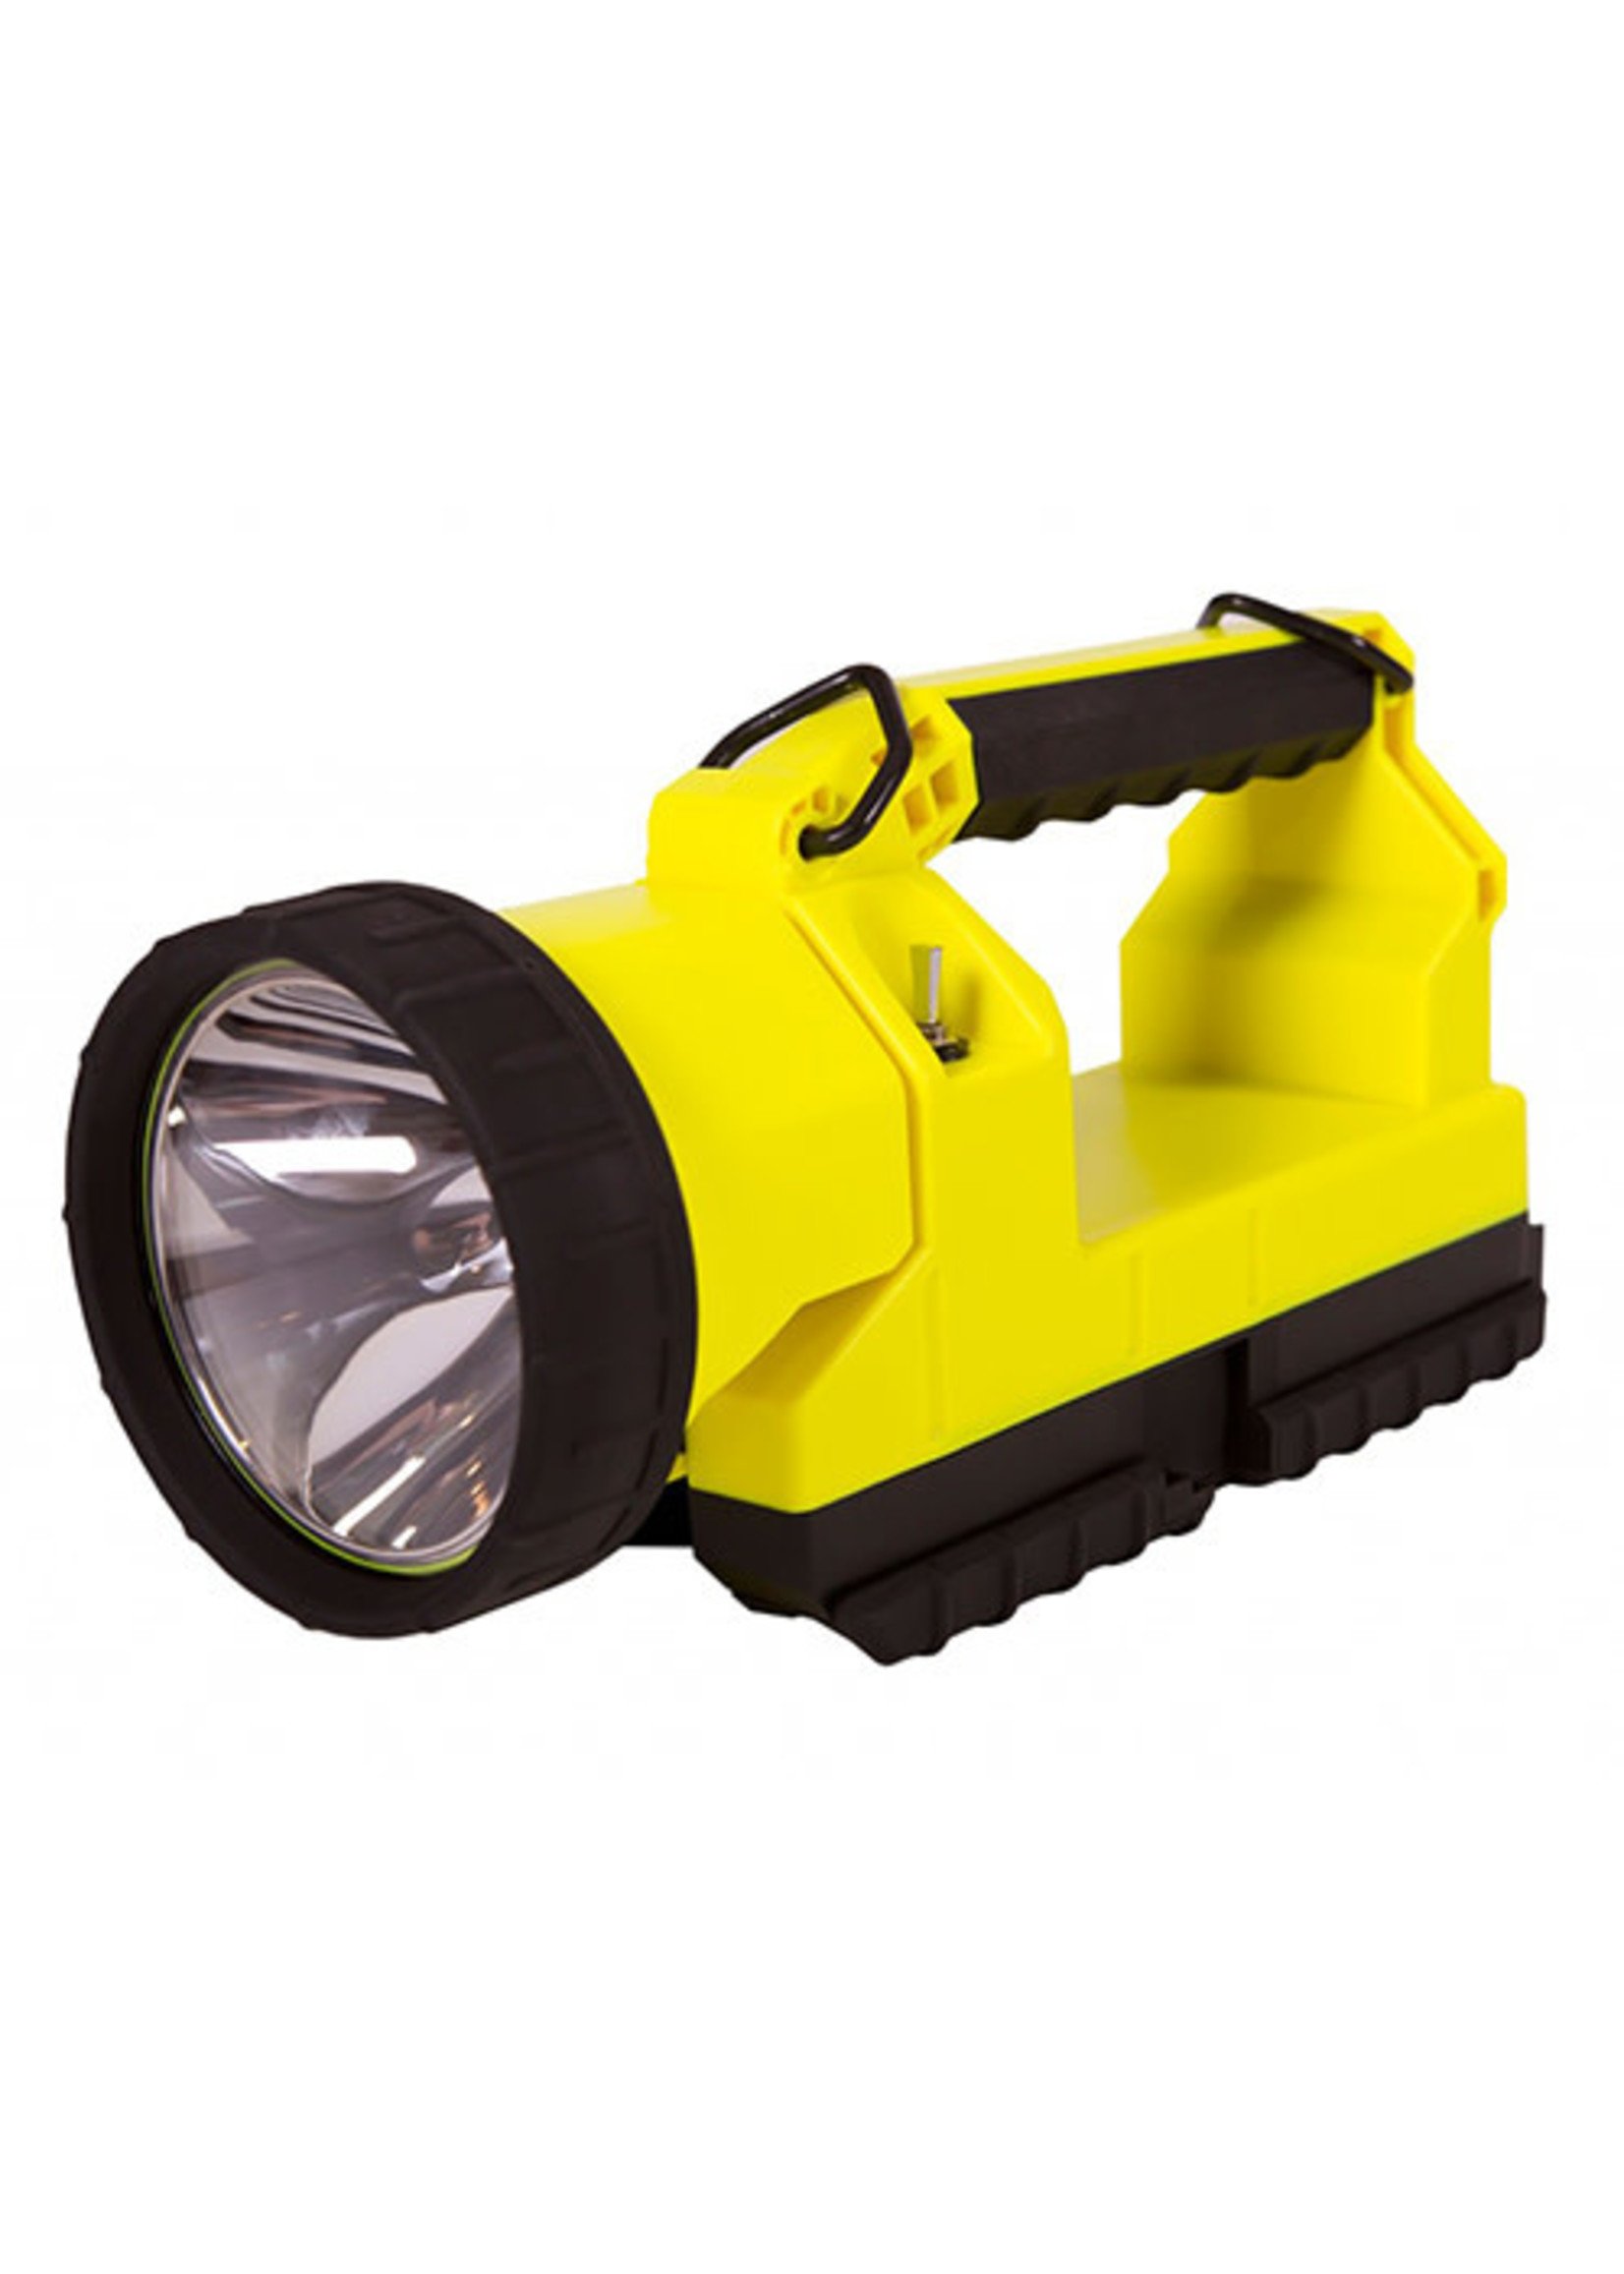 Led Lighthawk Flashlight, Yellow